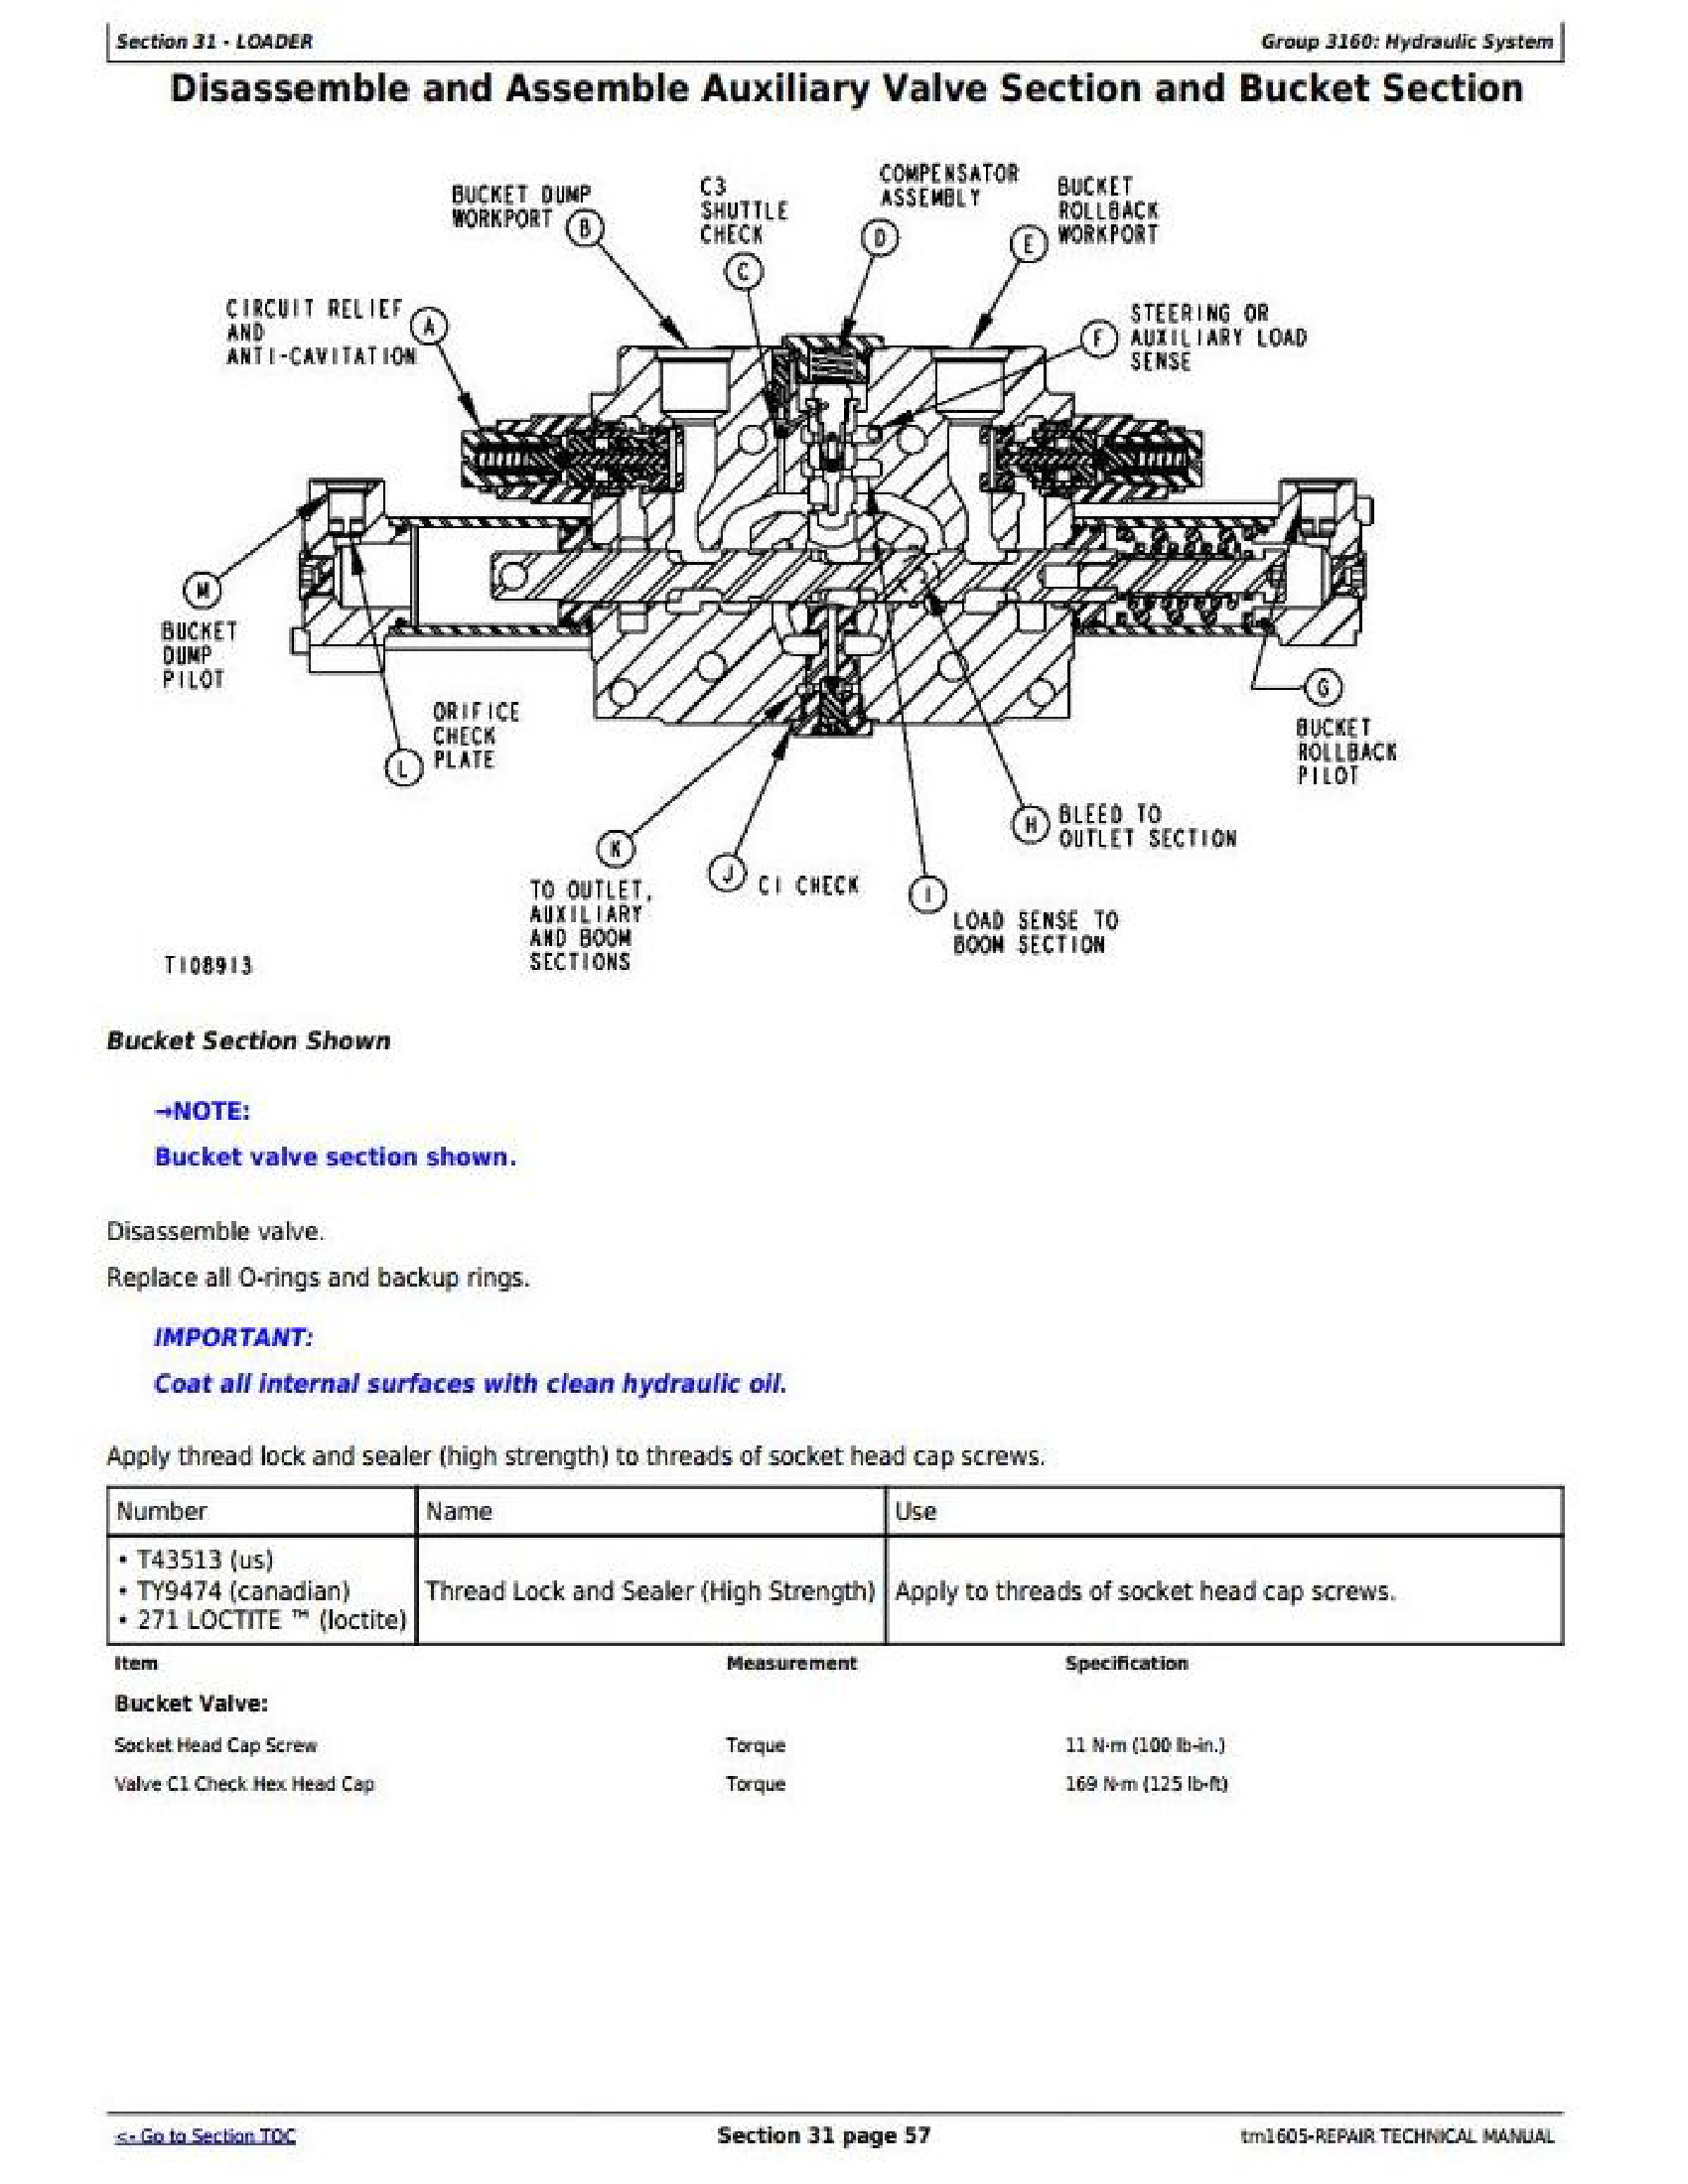 John Deere 1FF017GX**K225001��������������� manual pdf